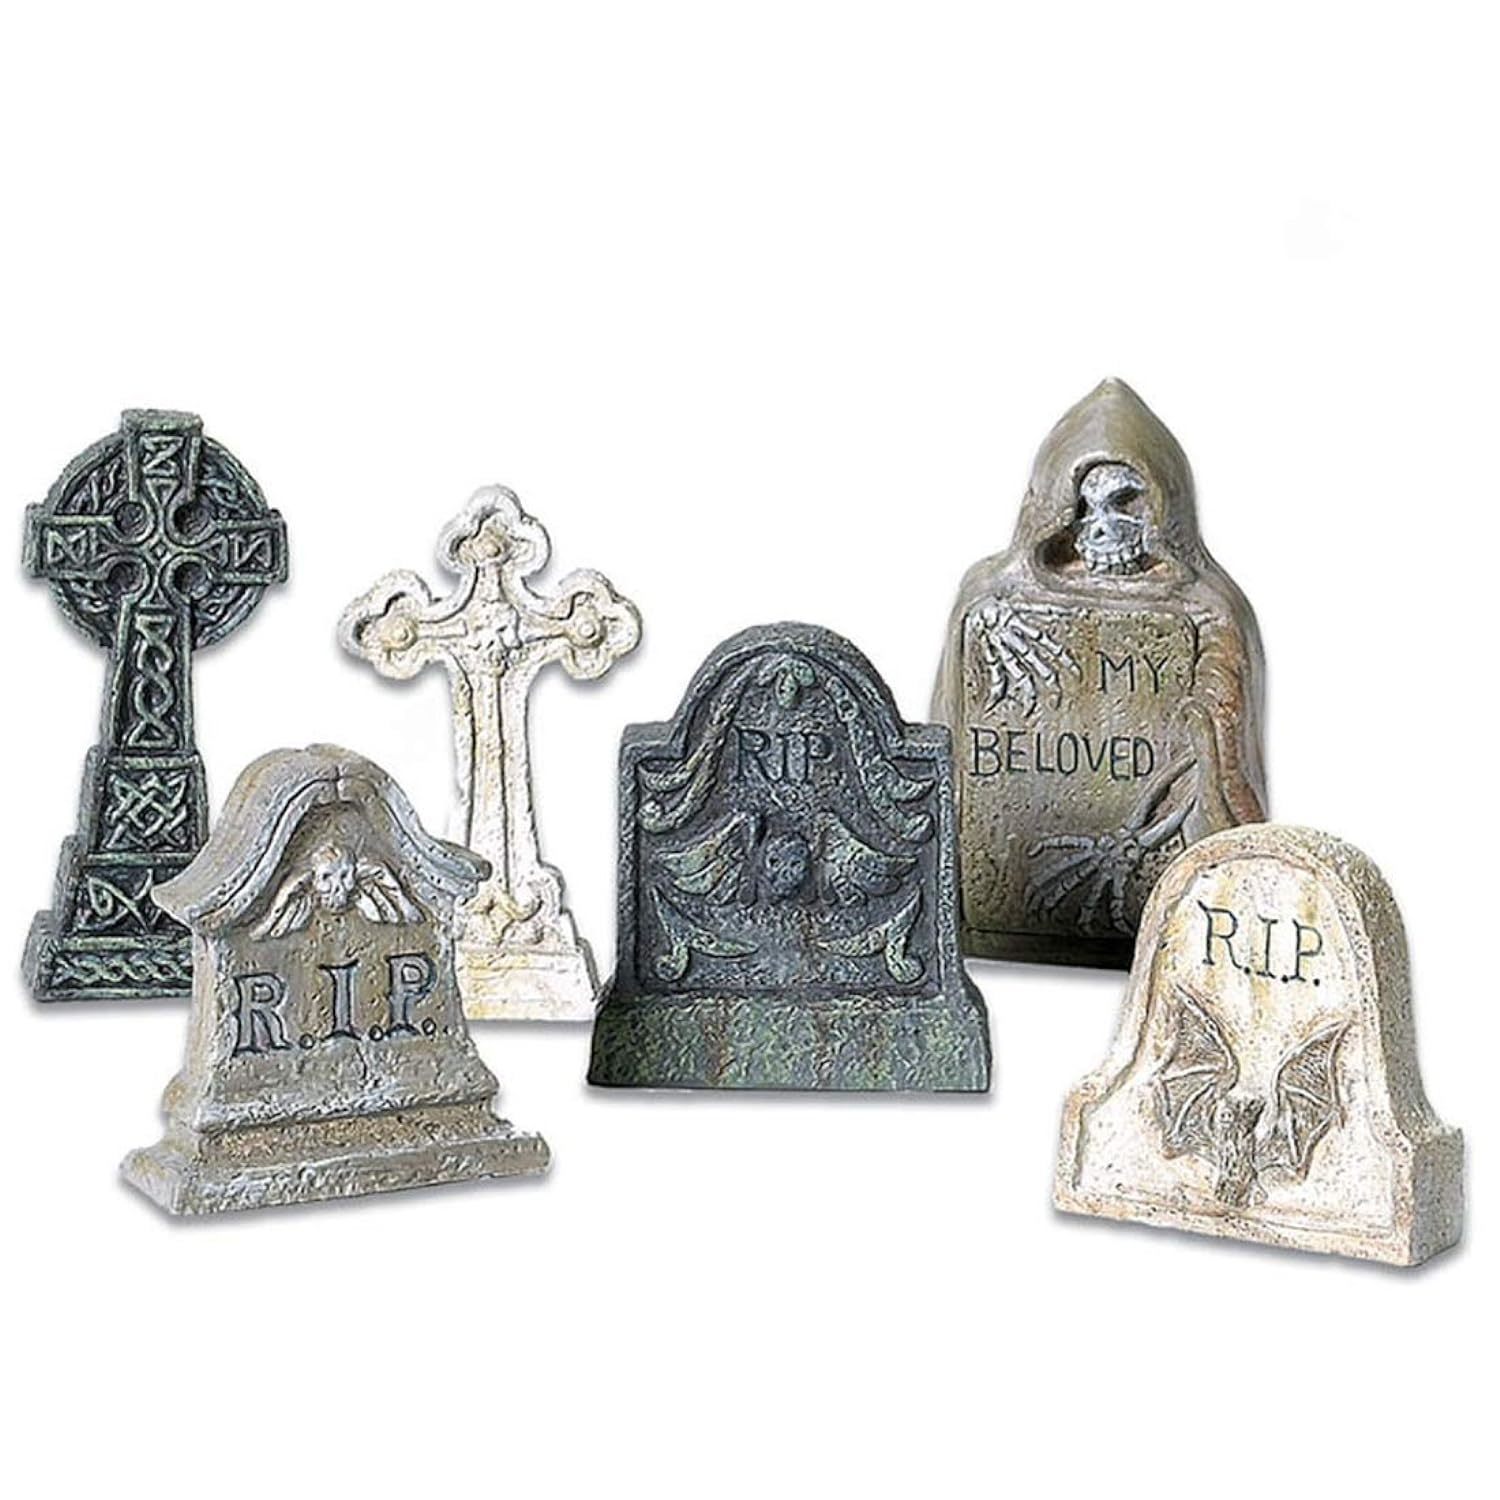 Department 56 Halloween Accessories for Village Collections Tombstones Figurine  - $24.99